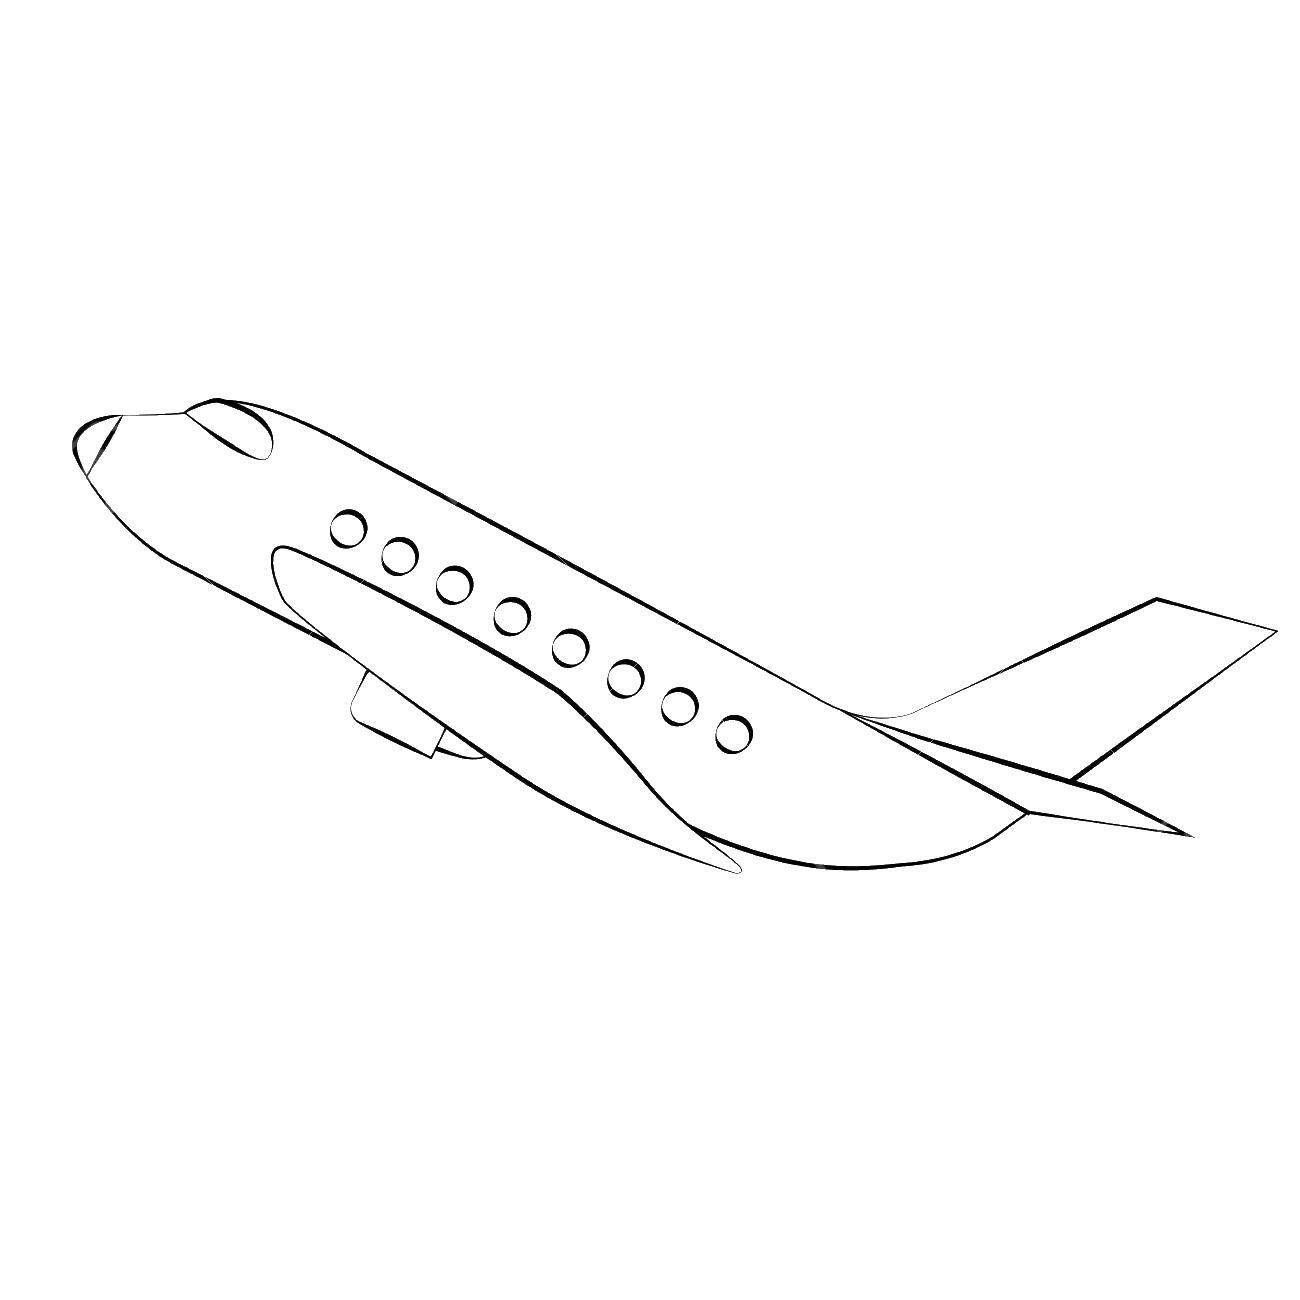 Название: Раскраска Самолет реактивный на взлете. Категория: Контур самолета. Теги: самолет.